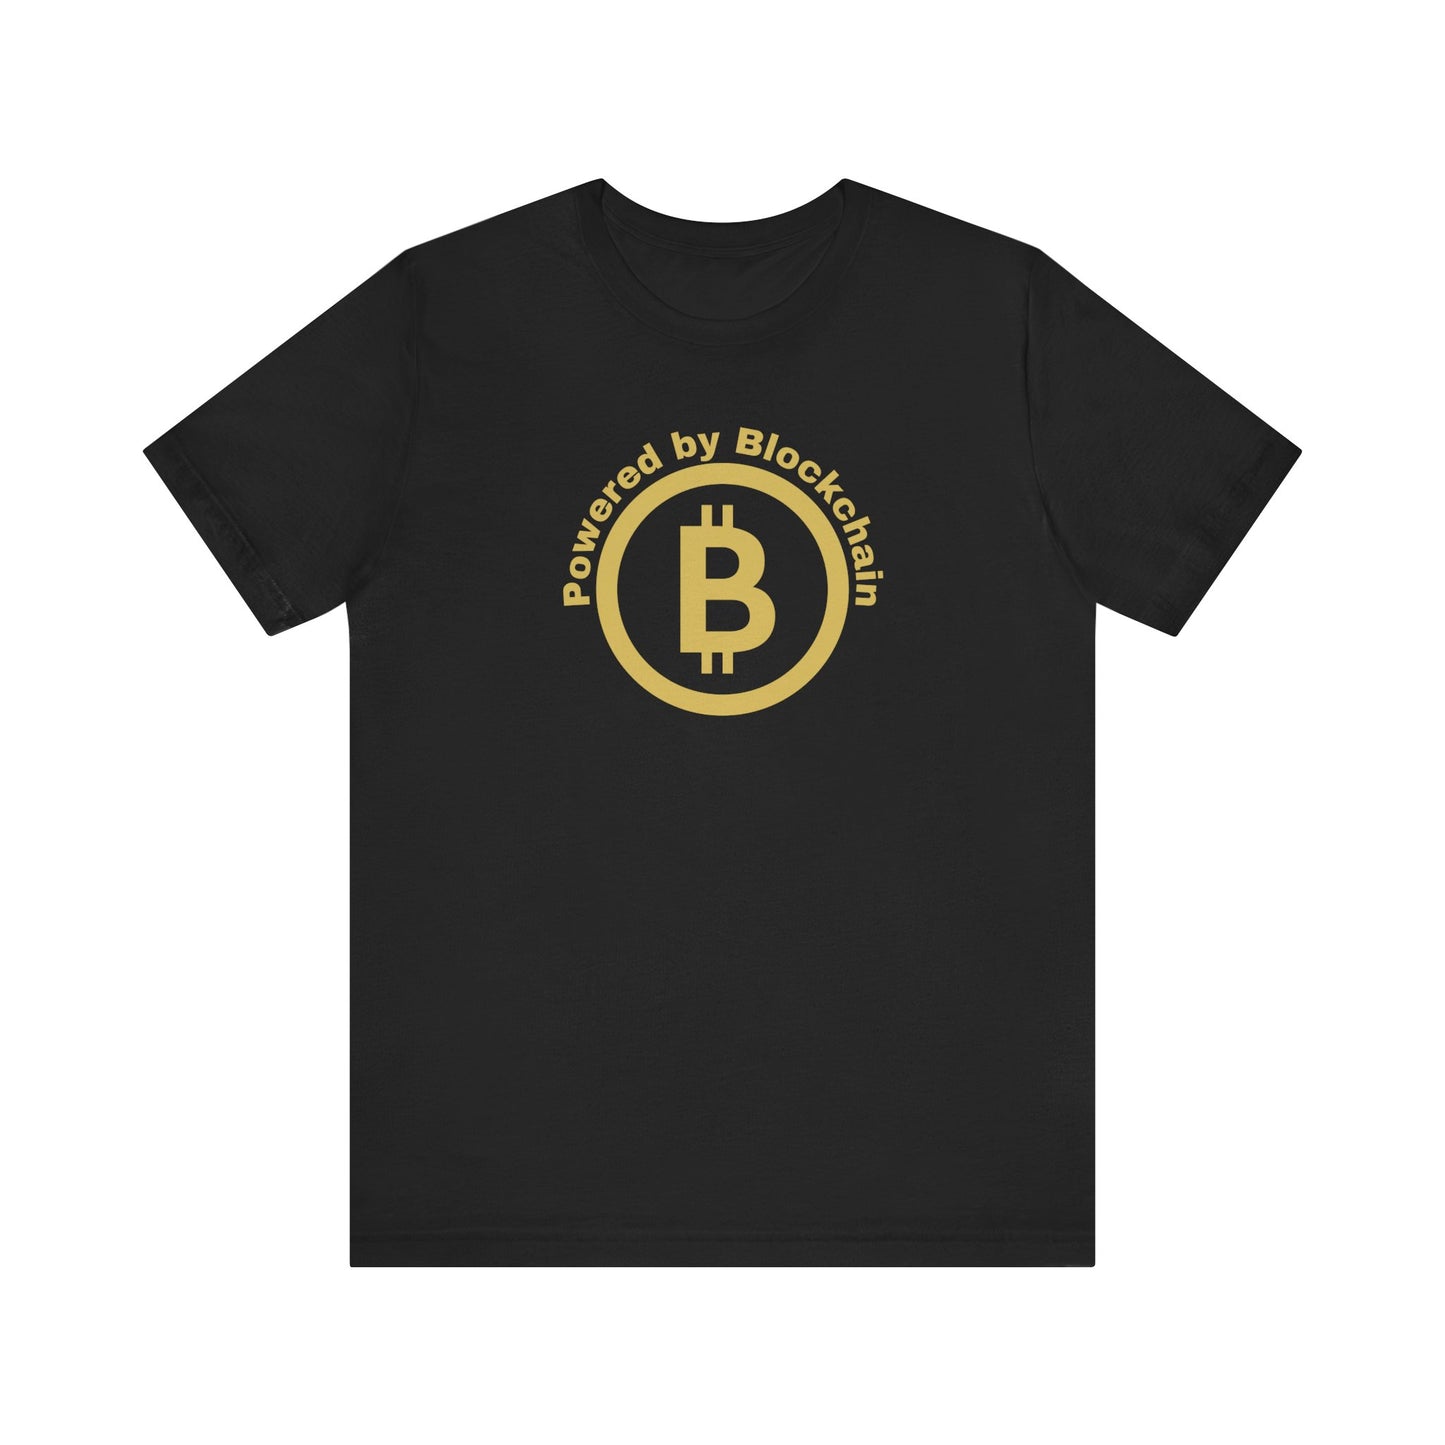 Black Bella Canvas bitcoin t-shirt.